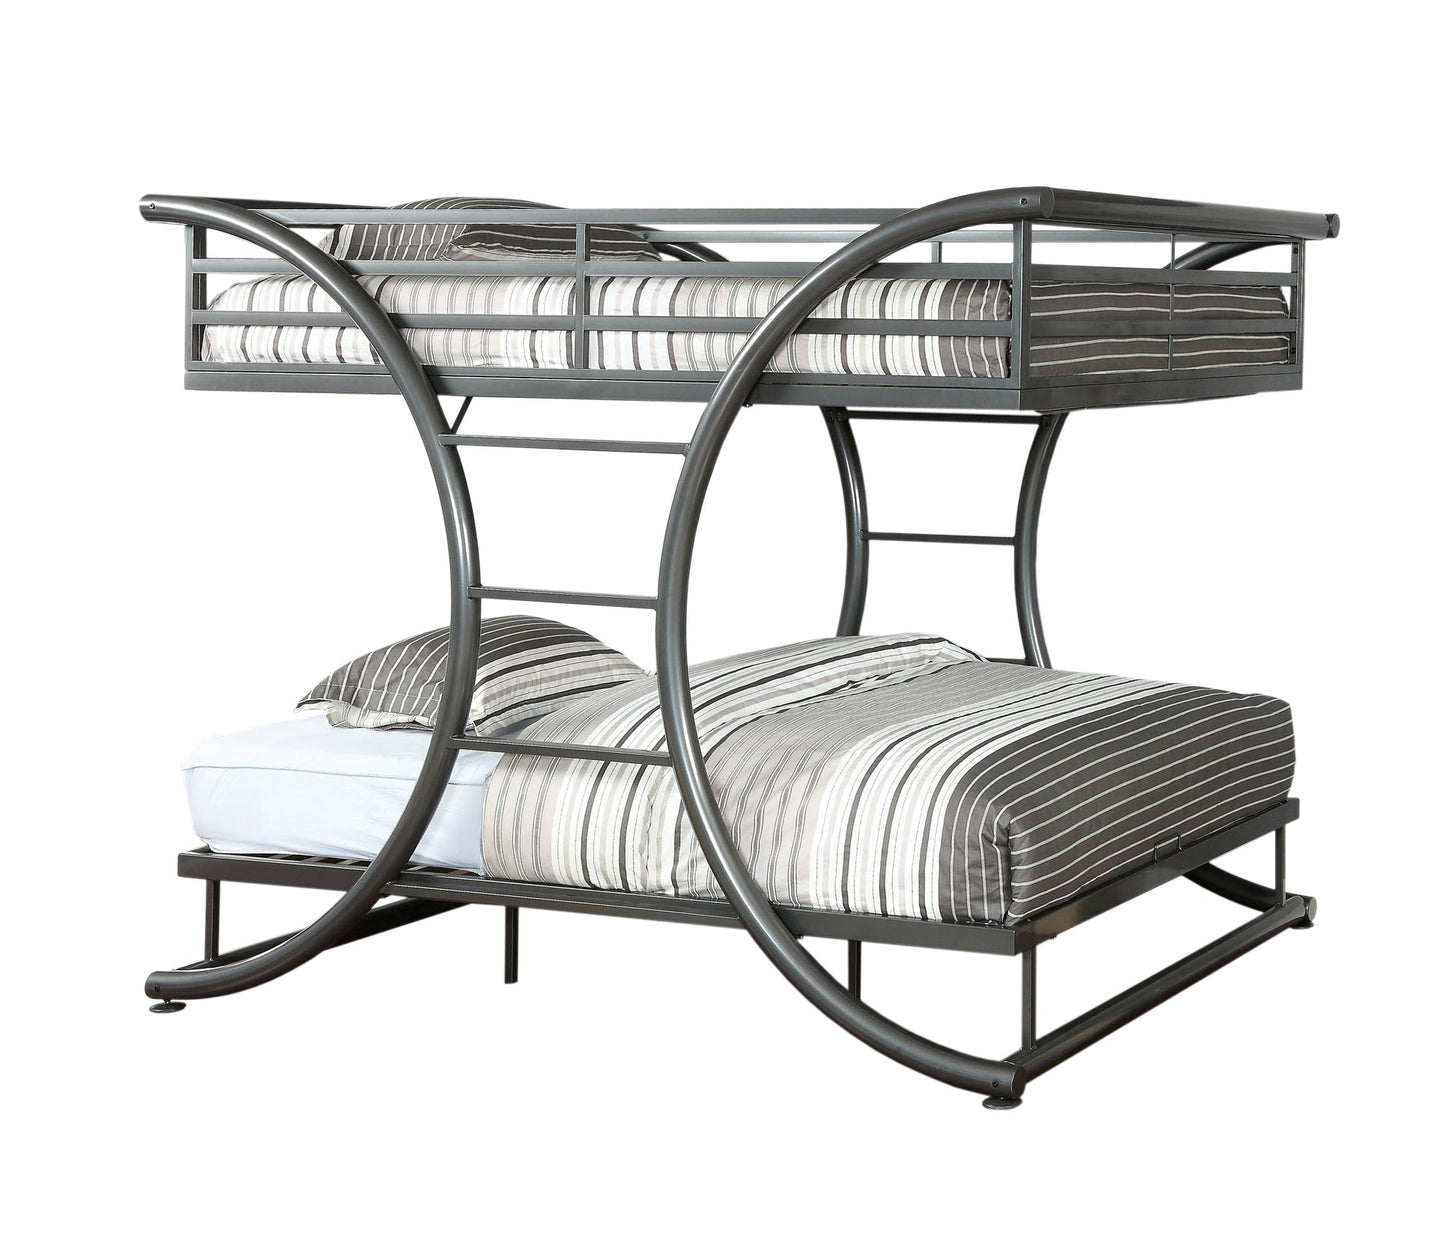 Circa Contemporary Metal Bunk Bed